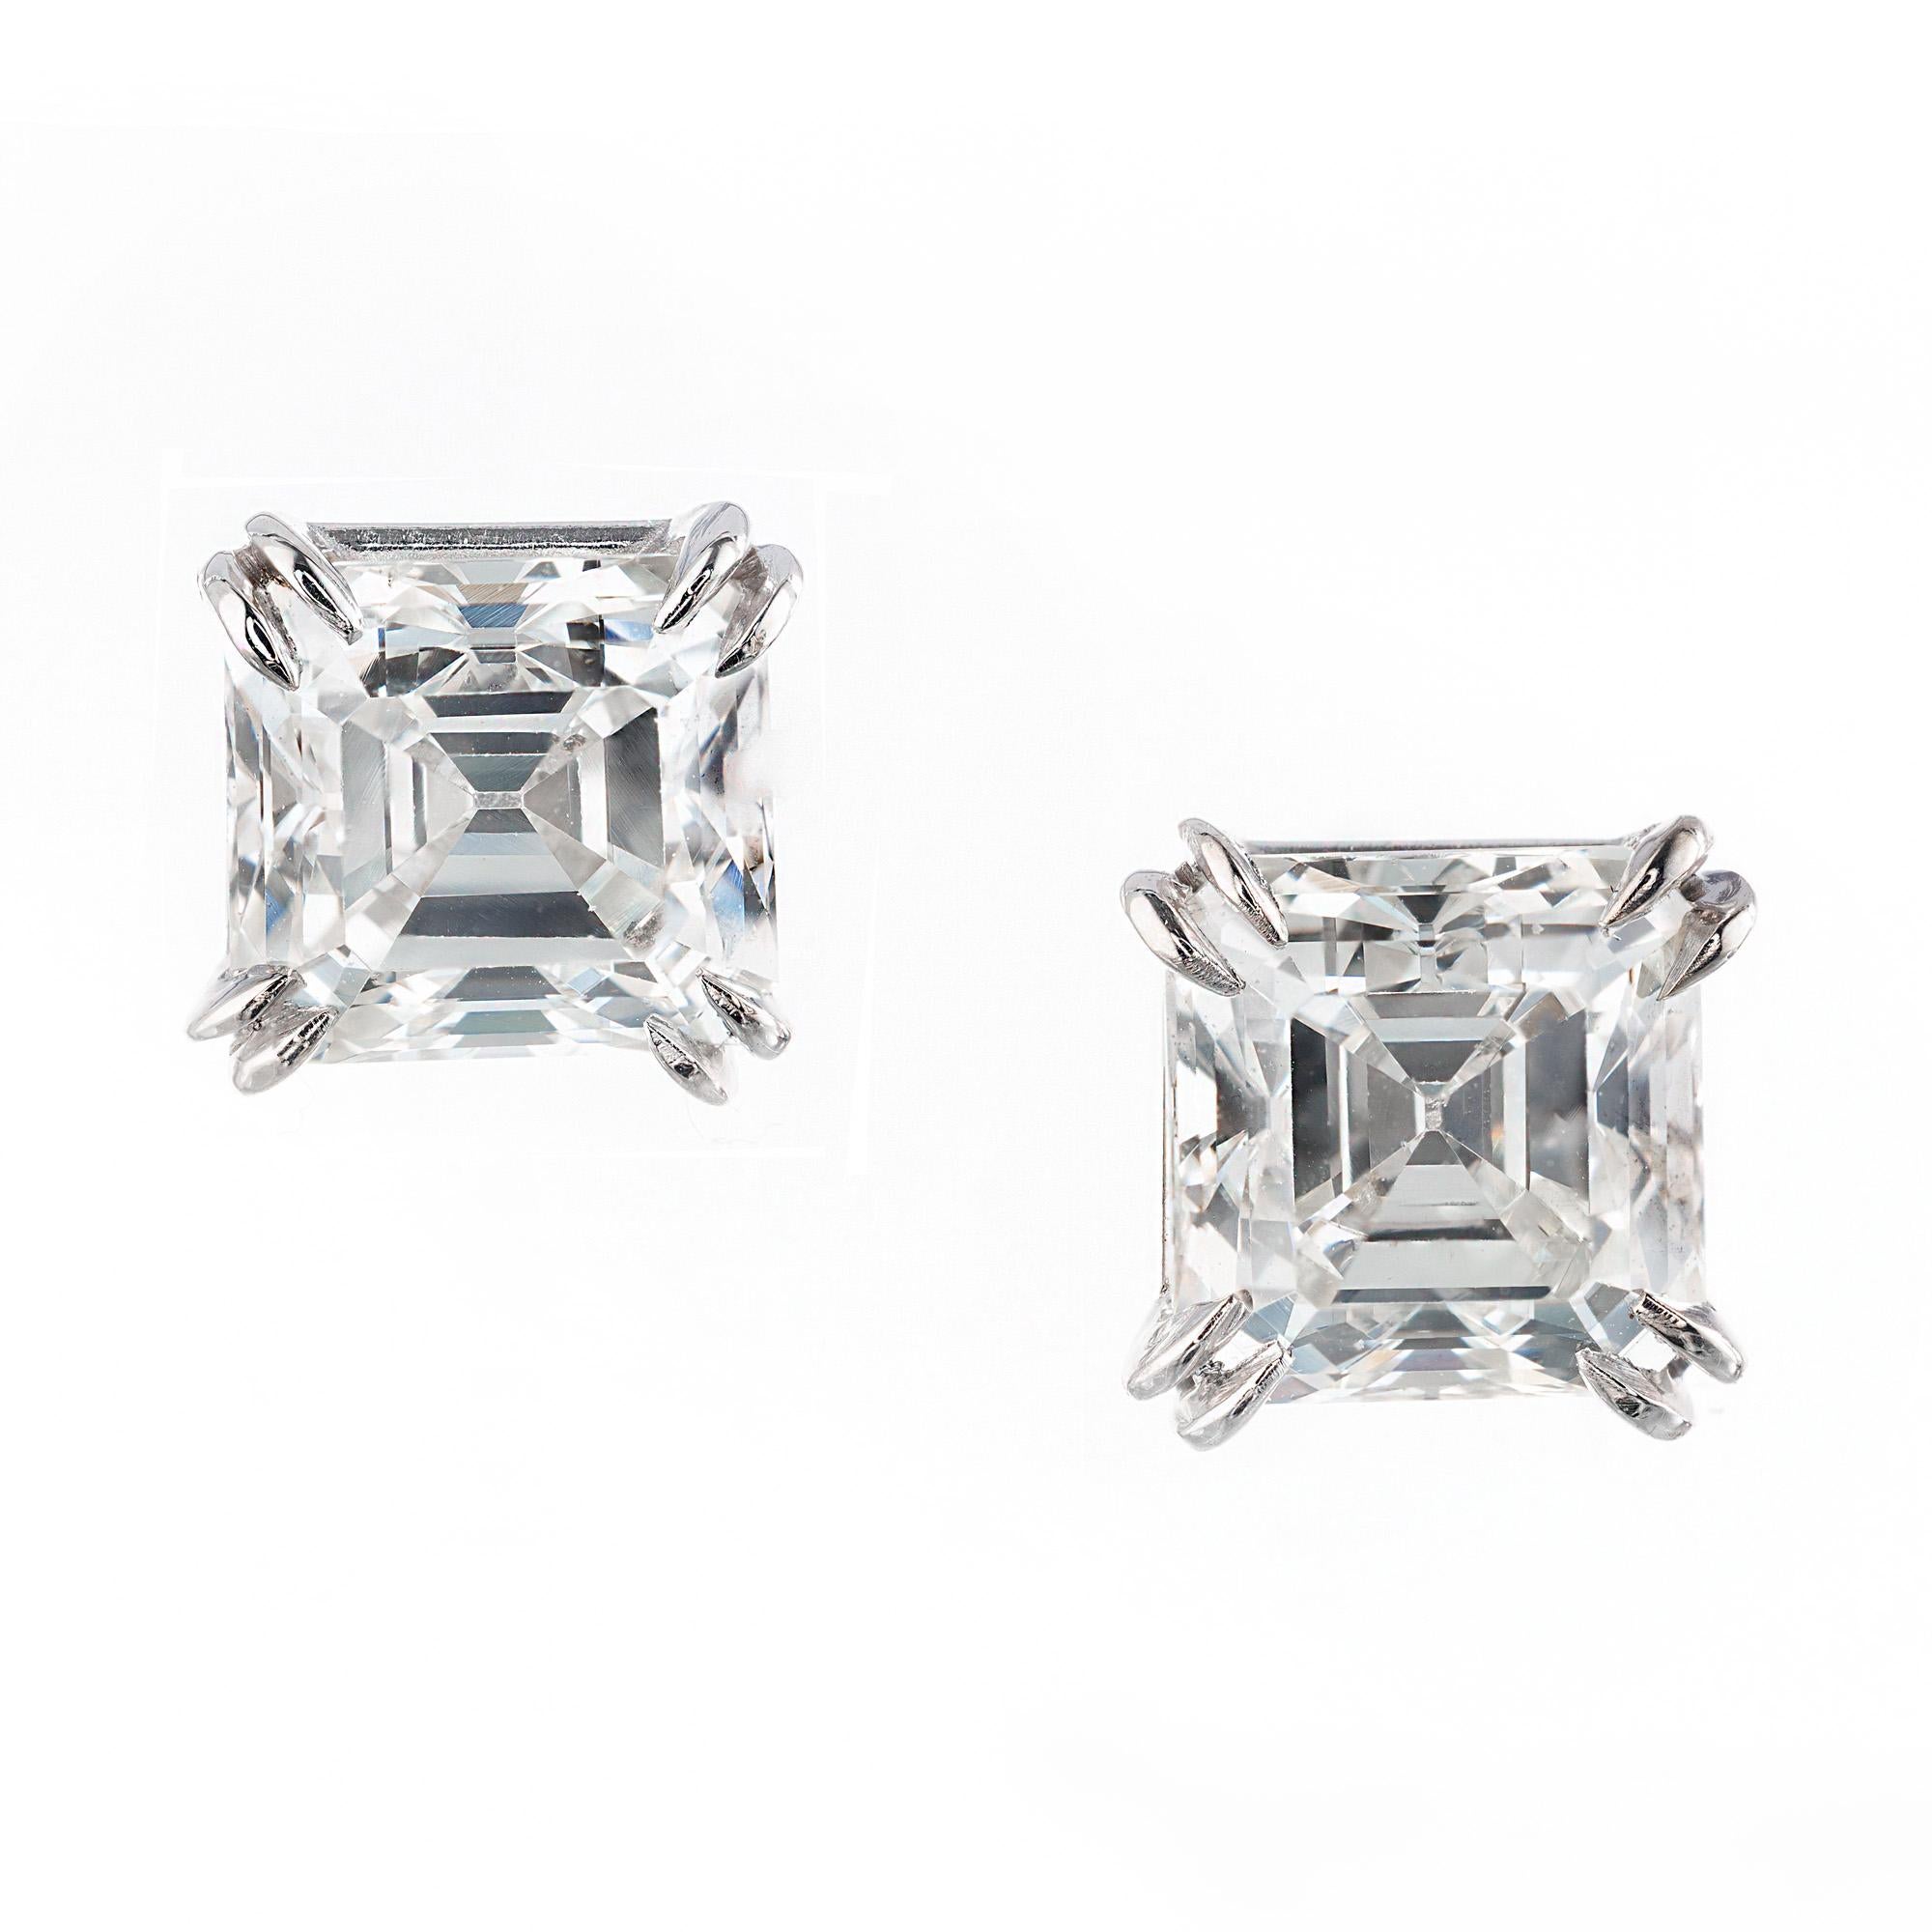 Peter Suchy GIA Certified 2.08 Carat Diamond Platinum Stud Earrings